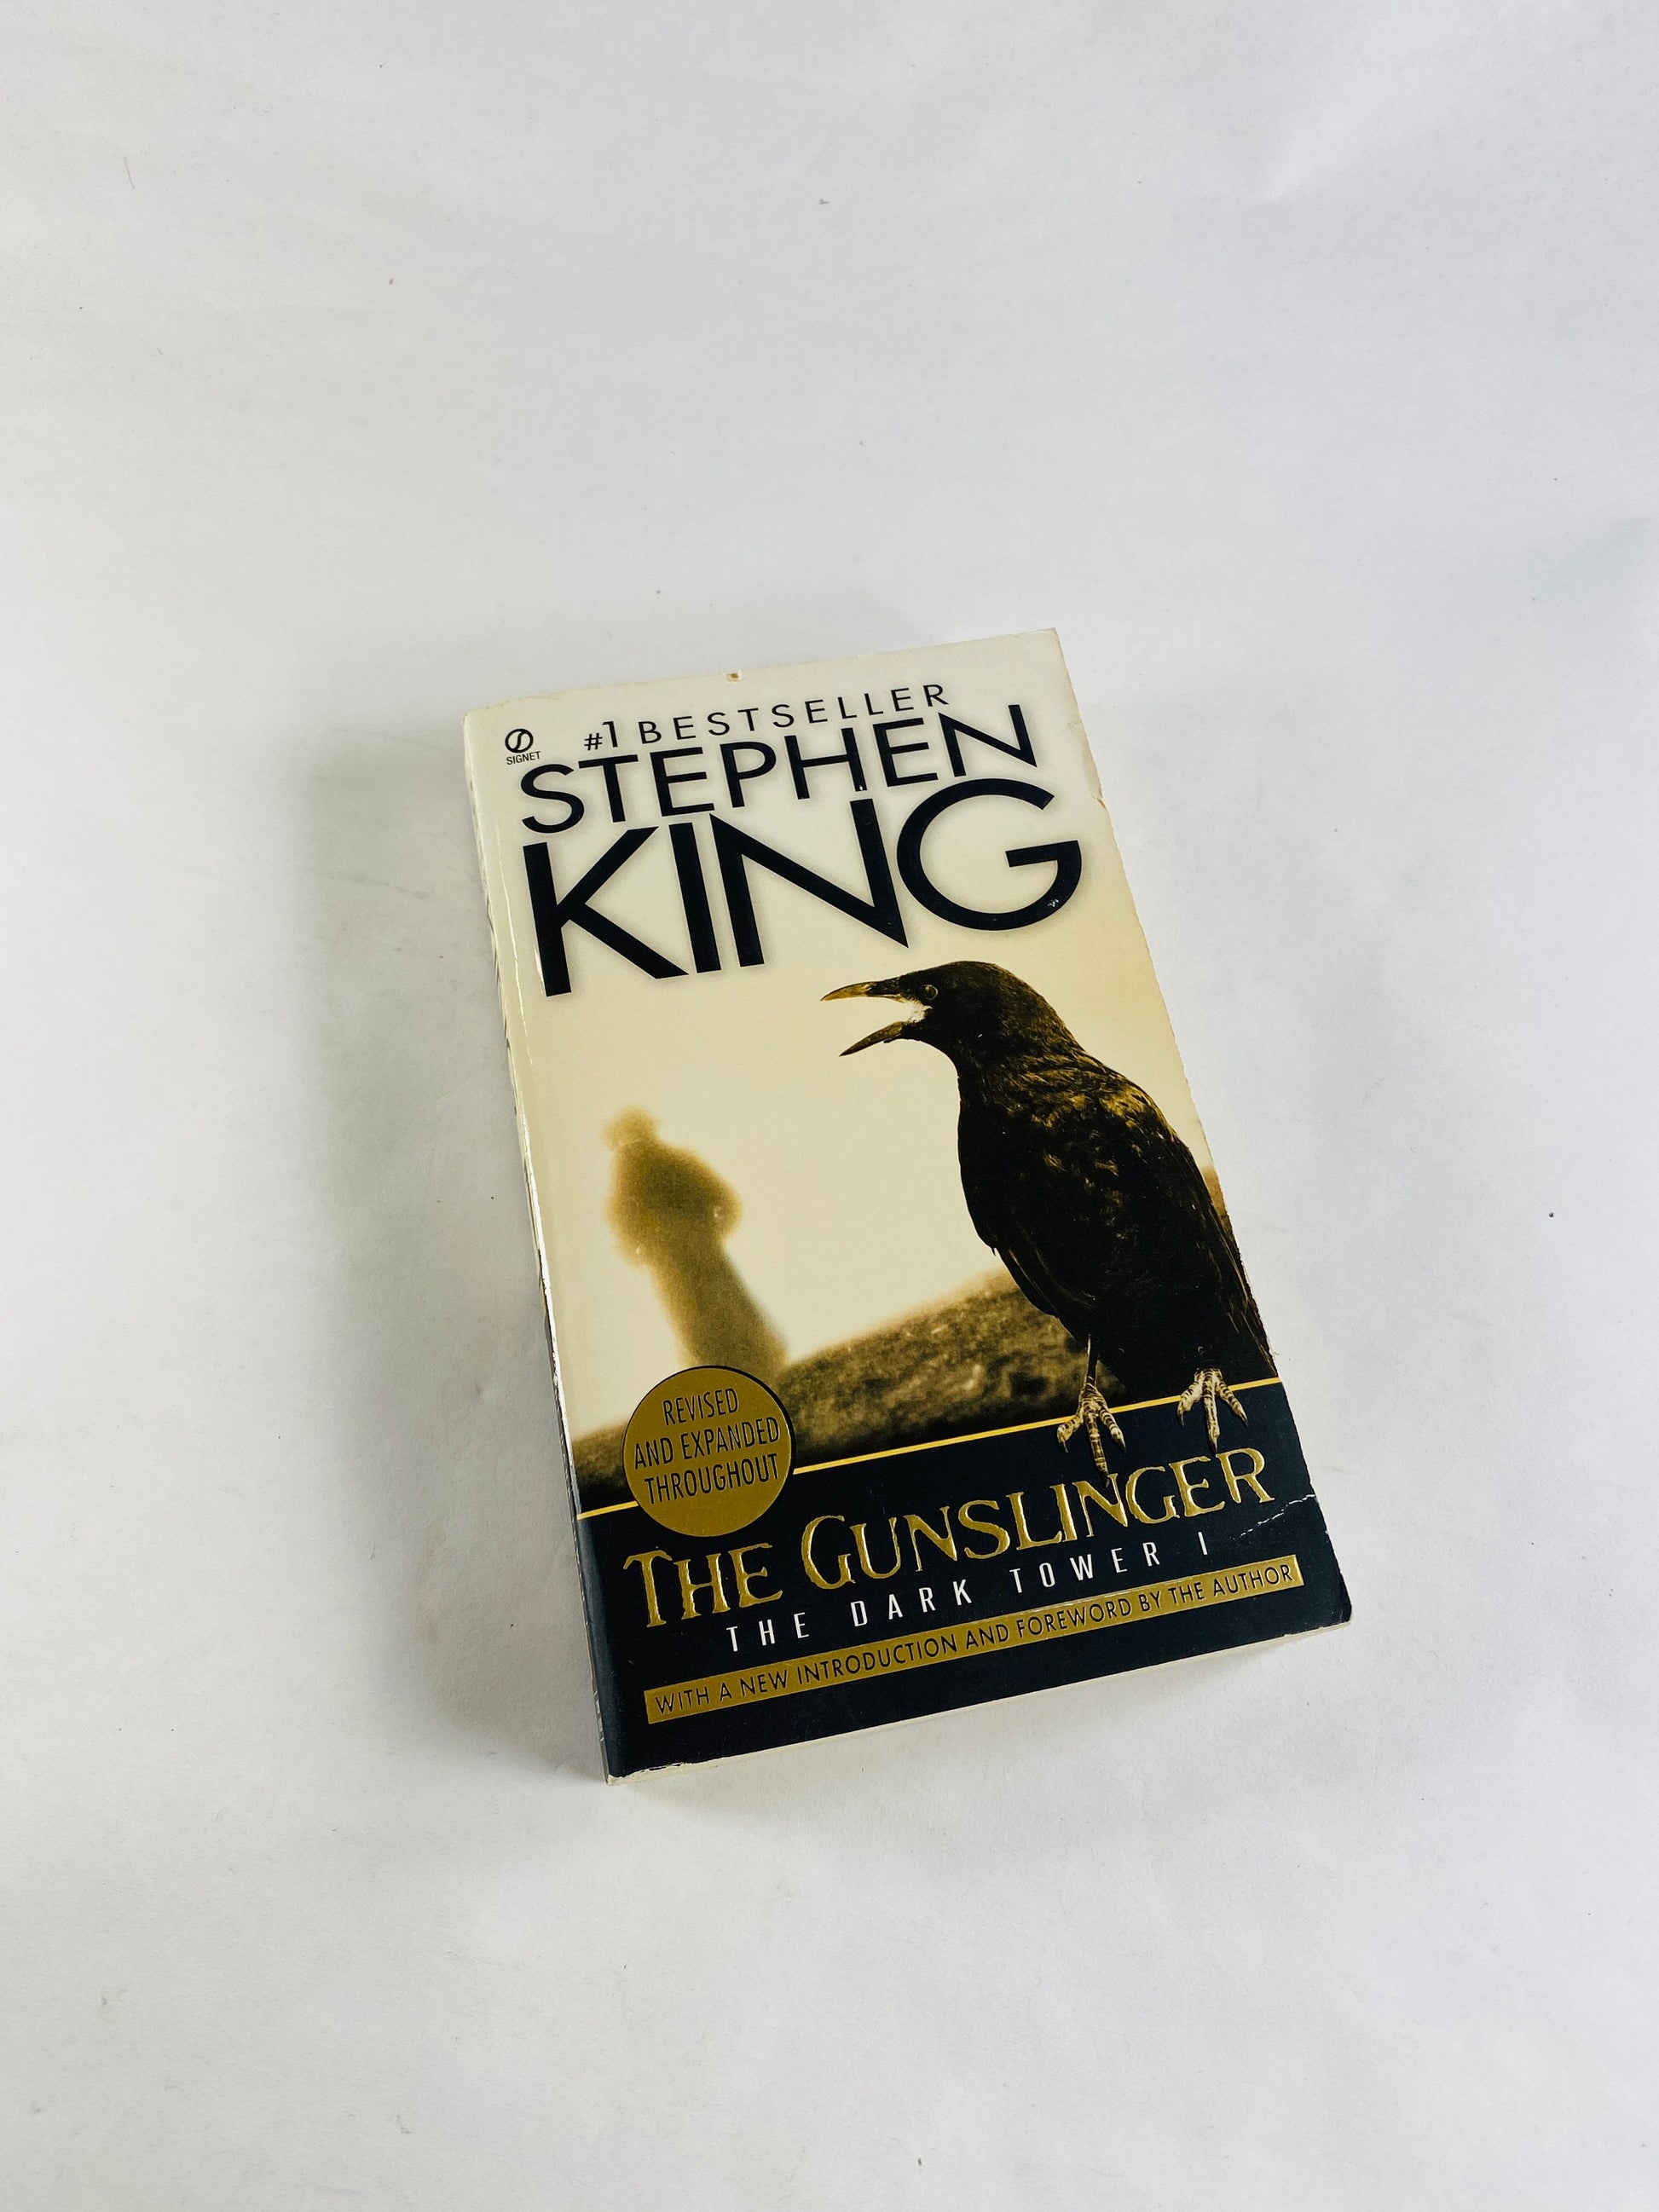 Dark Tower I The Gunslinger by Stephen King vintage paperback book circa 2003. Book Lover Gift.